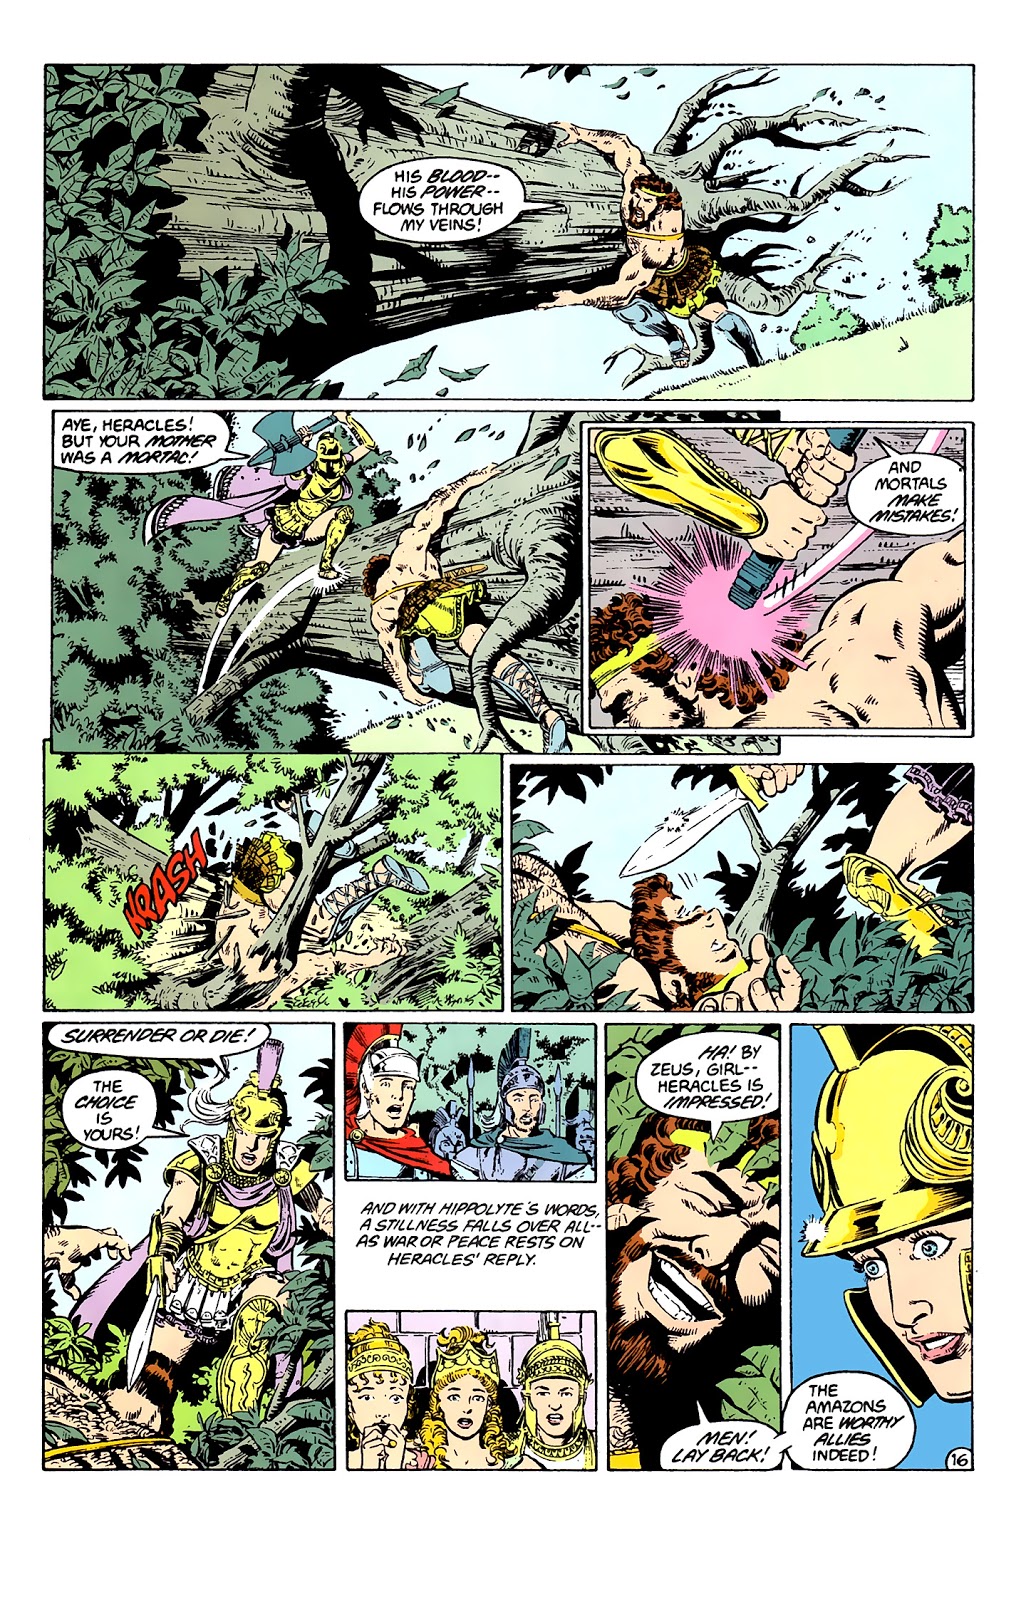 Hippolyta vs Heracles [Wonder Woman 1987 #1]